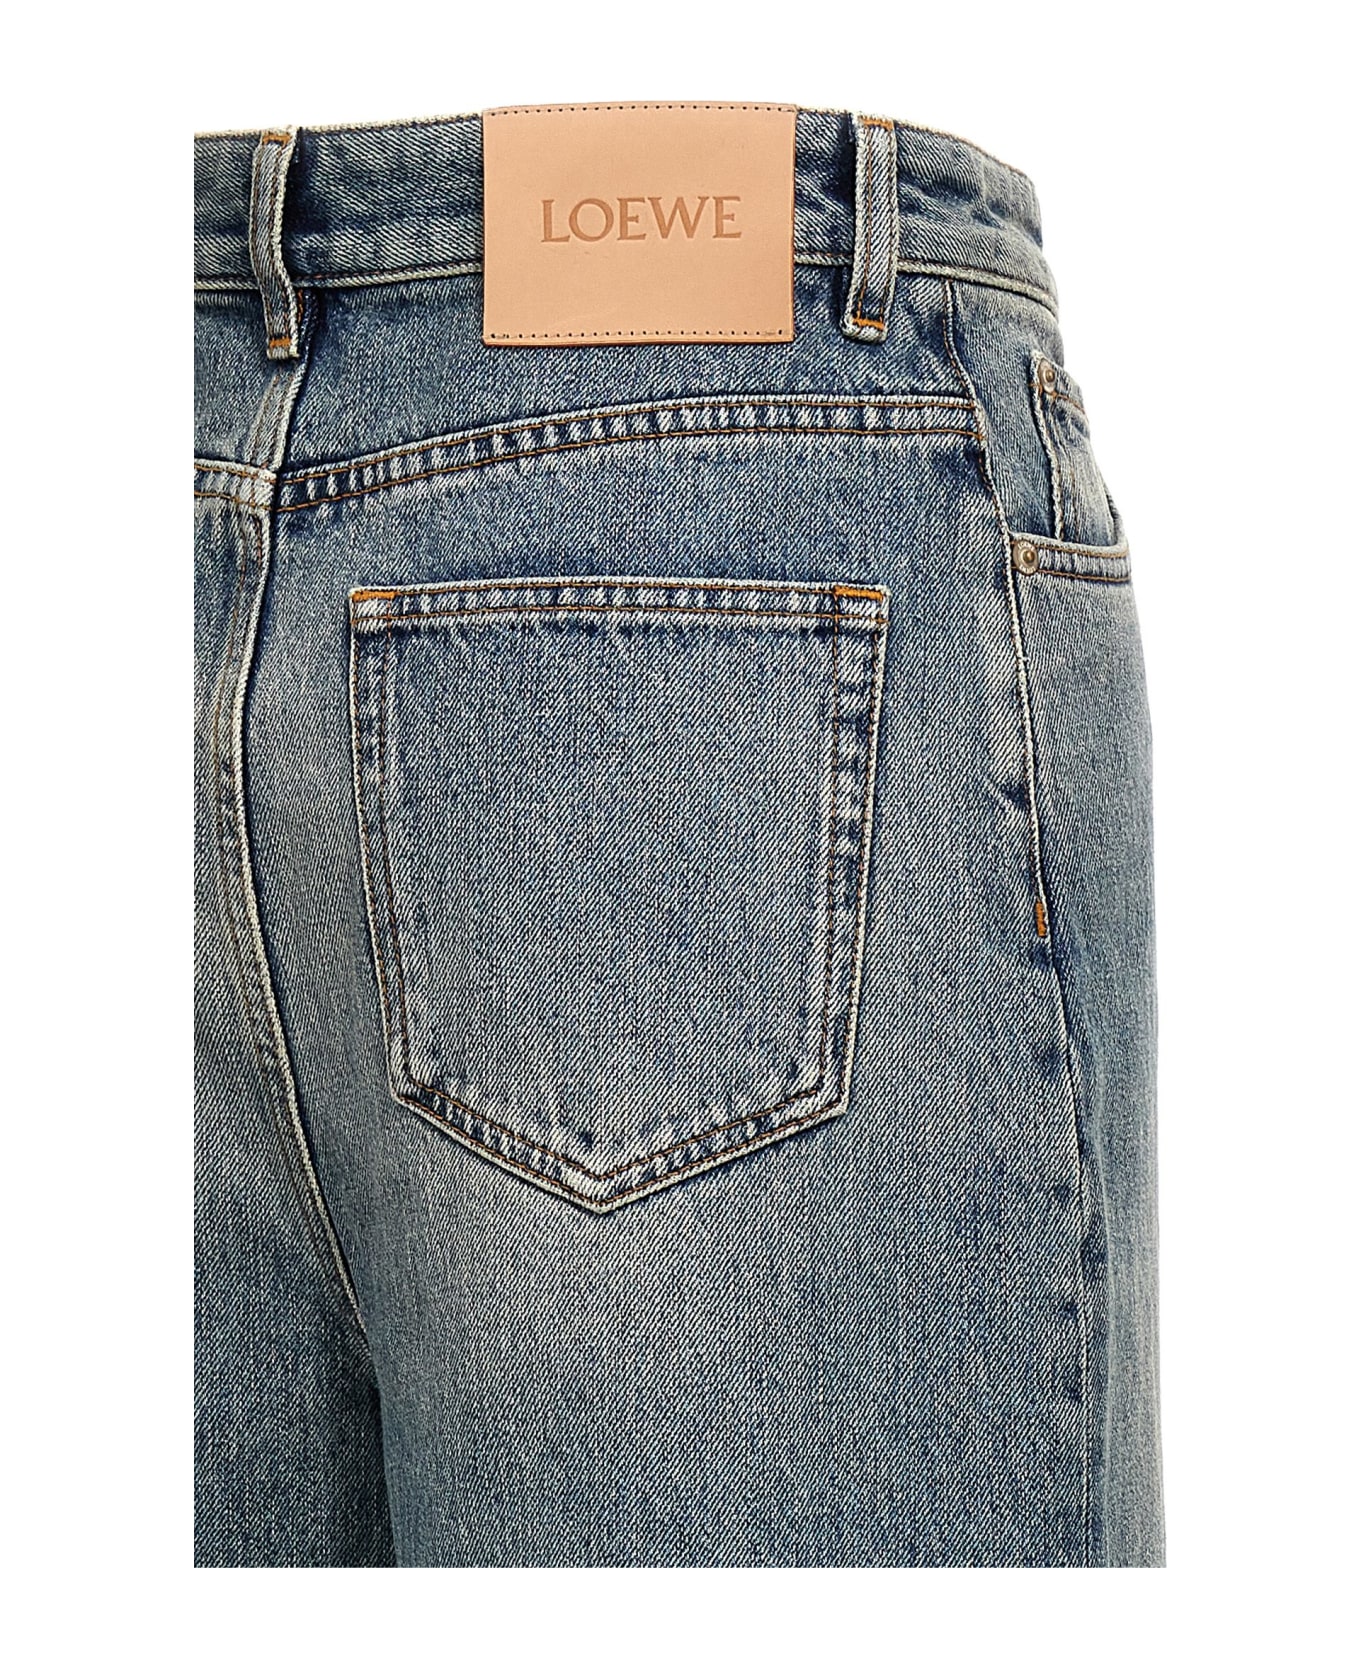 Loewe Denim Jeans - Light Blue